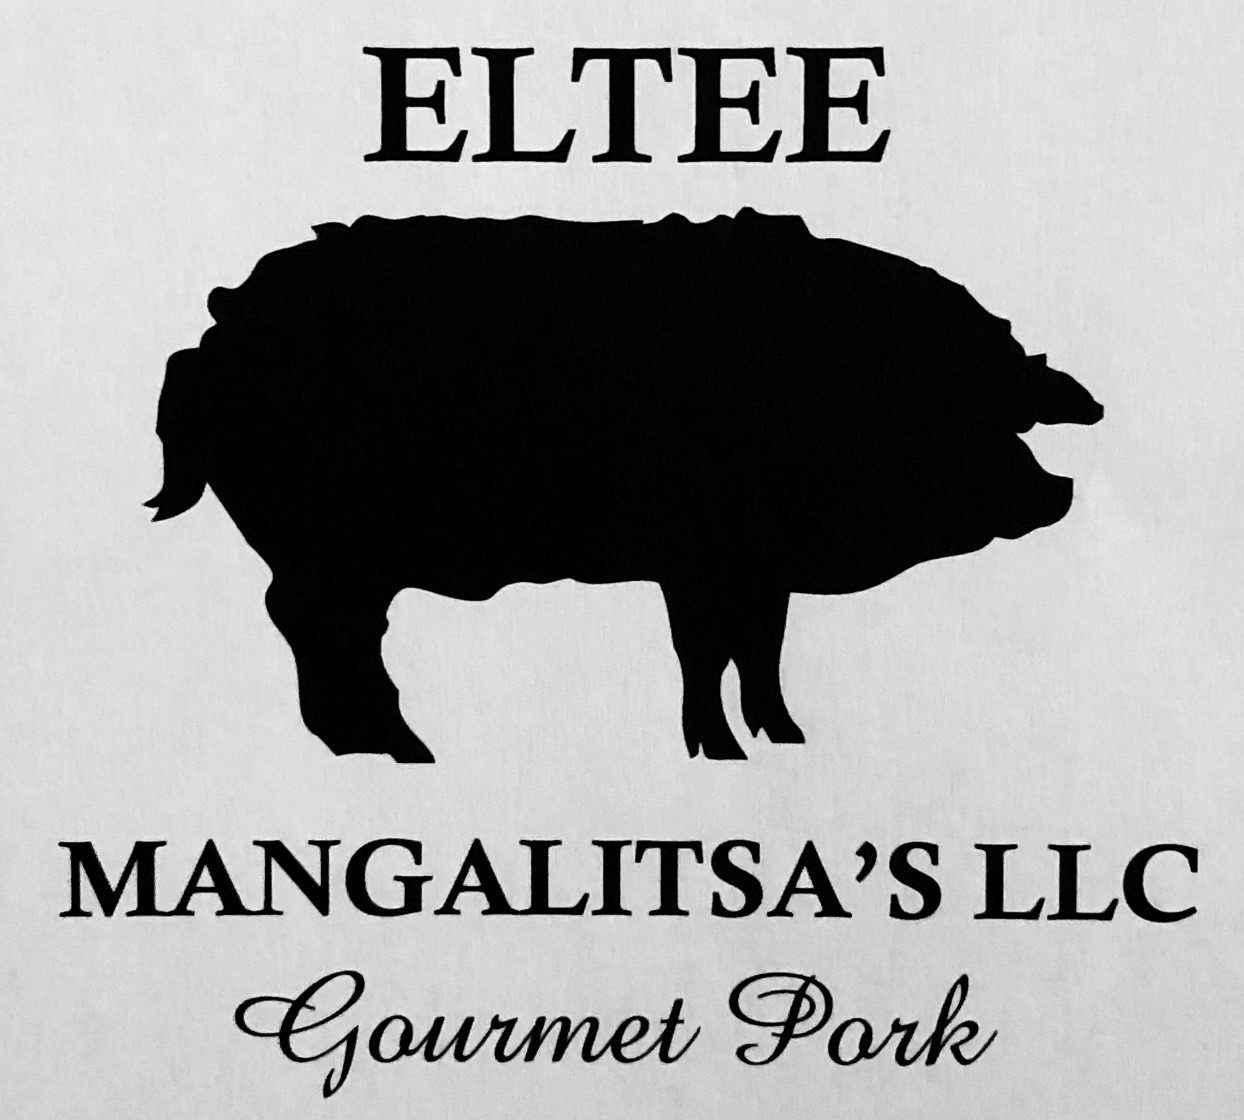 ELTEE Mangalitsa's LLC Logo